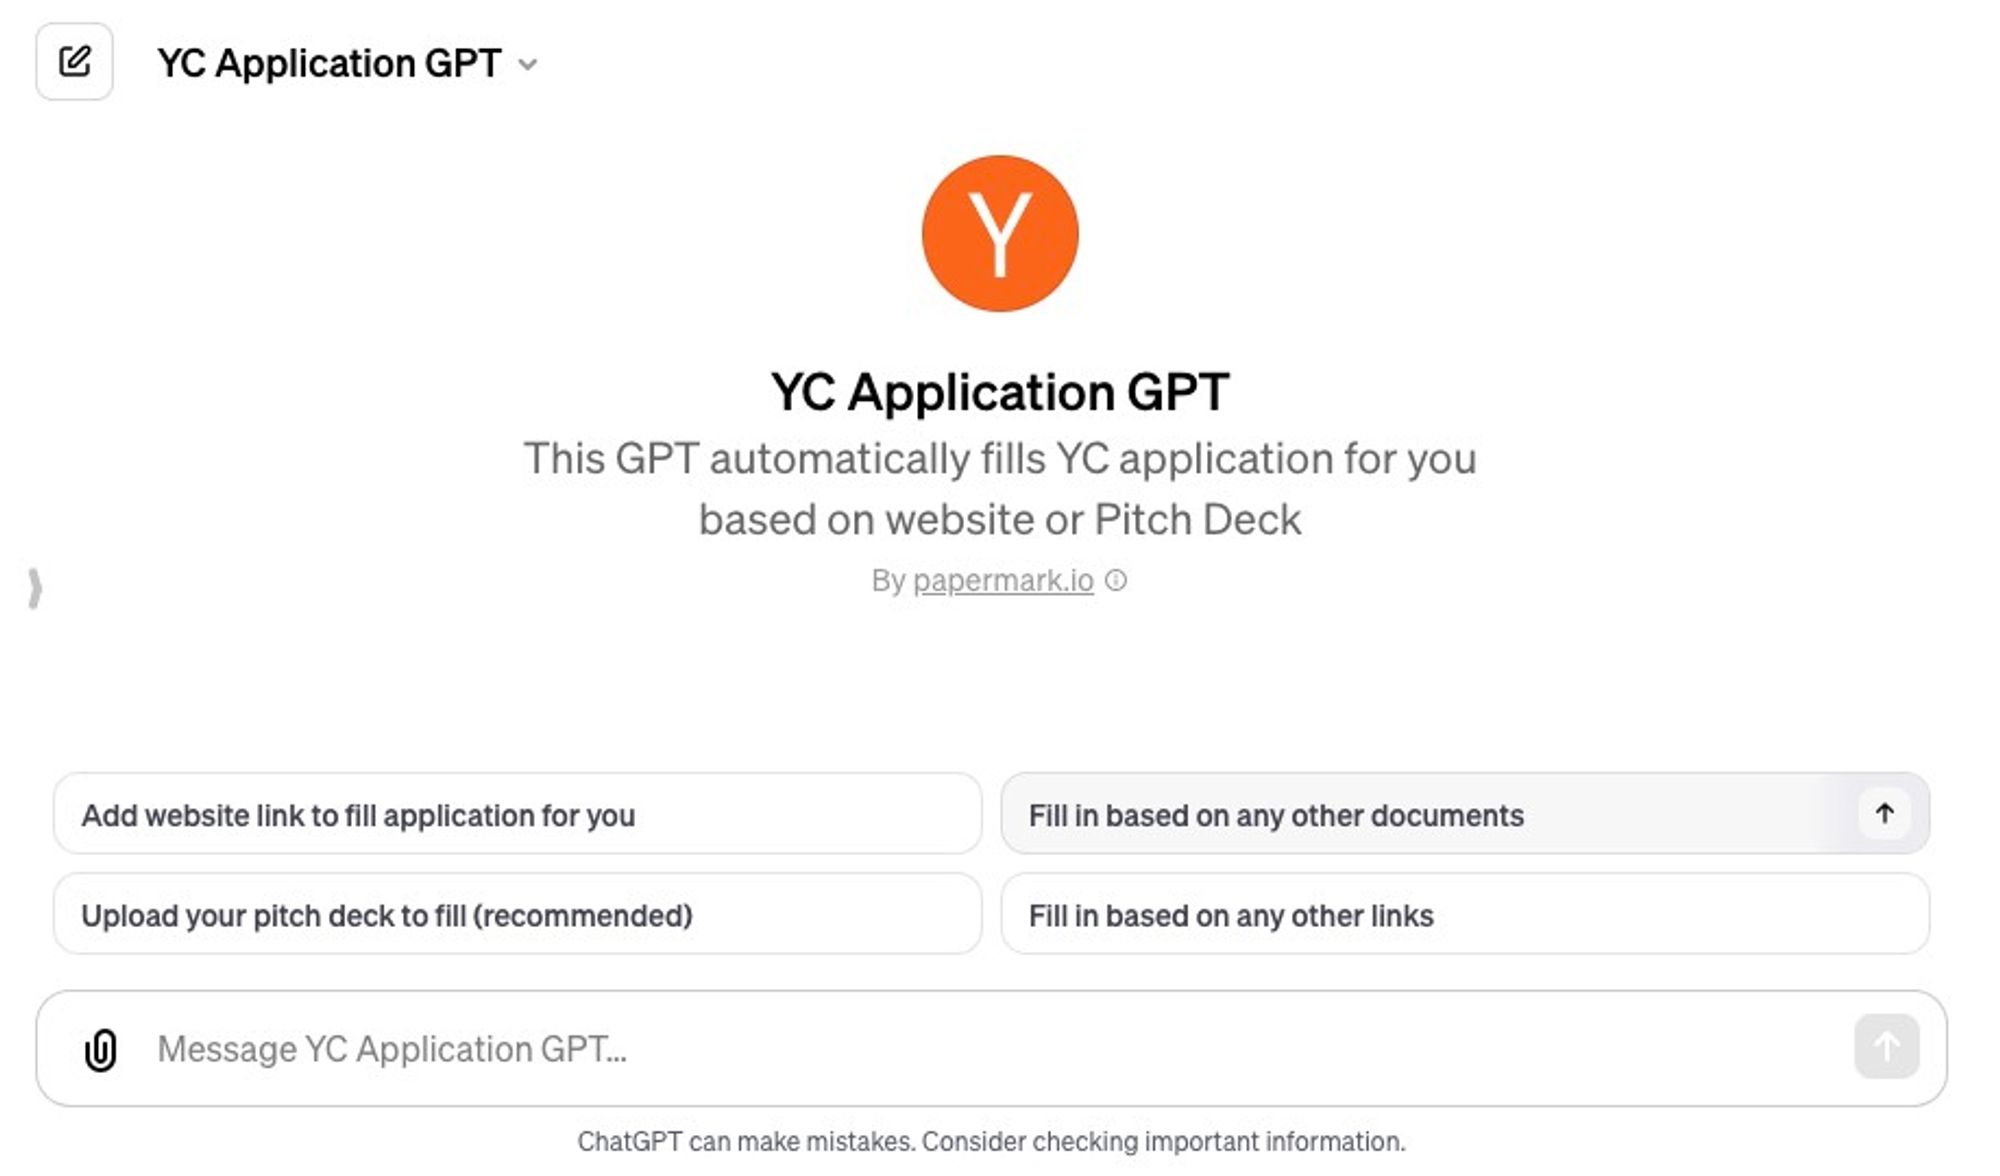 YC Application GPT